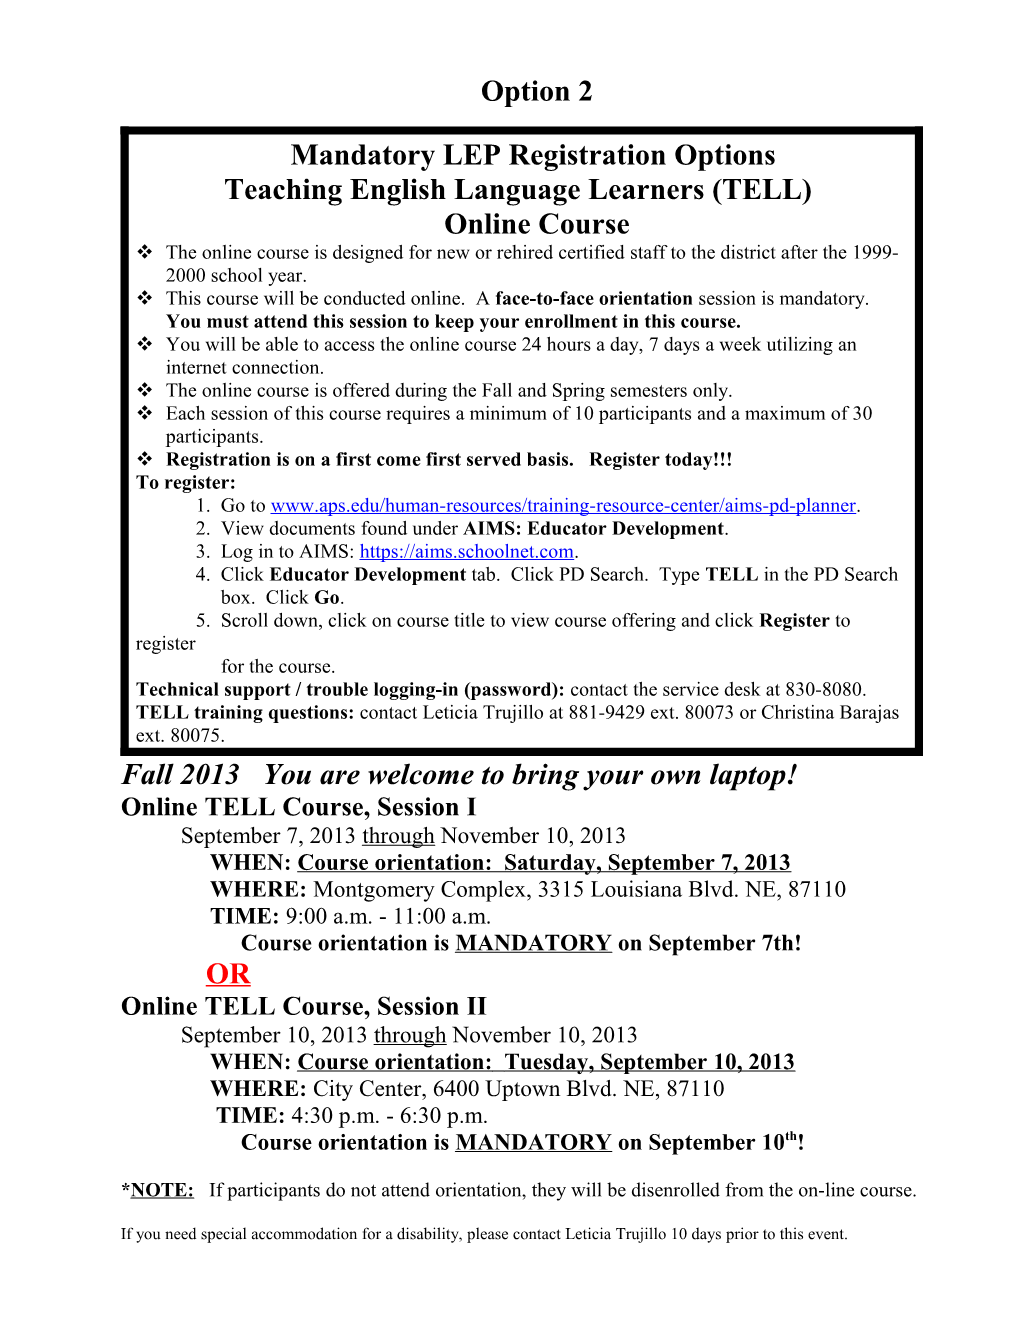 Mandatory LEP Registration Options Teaching English Language Learners (TELL)